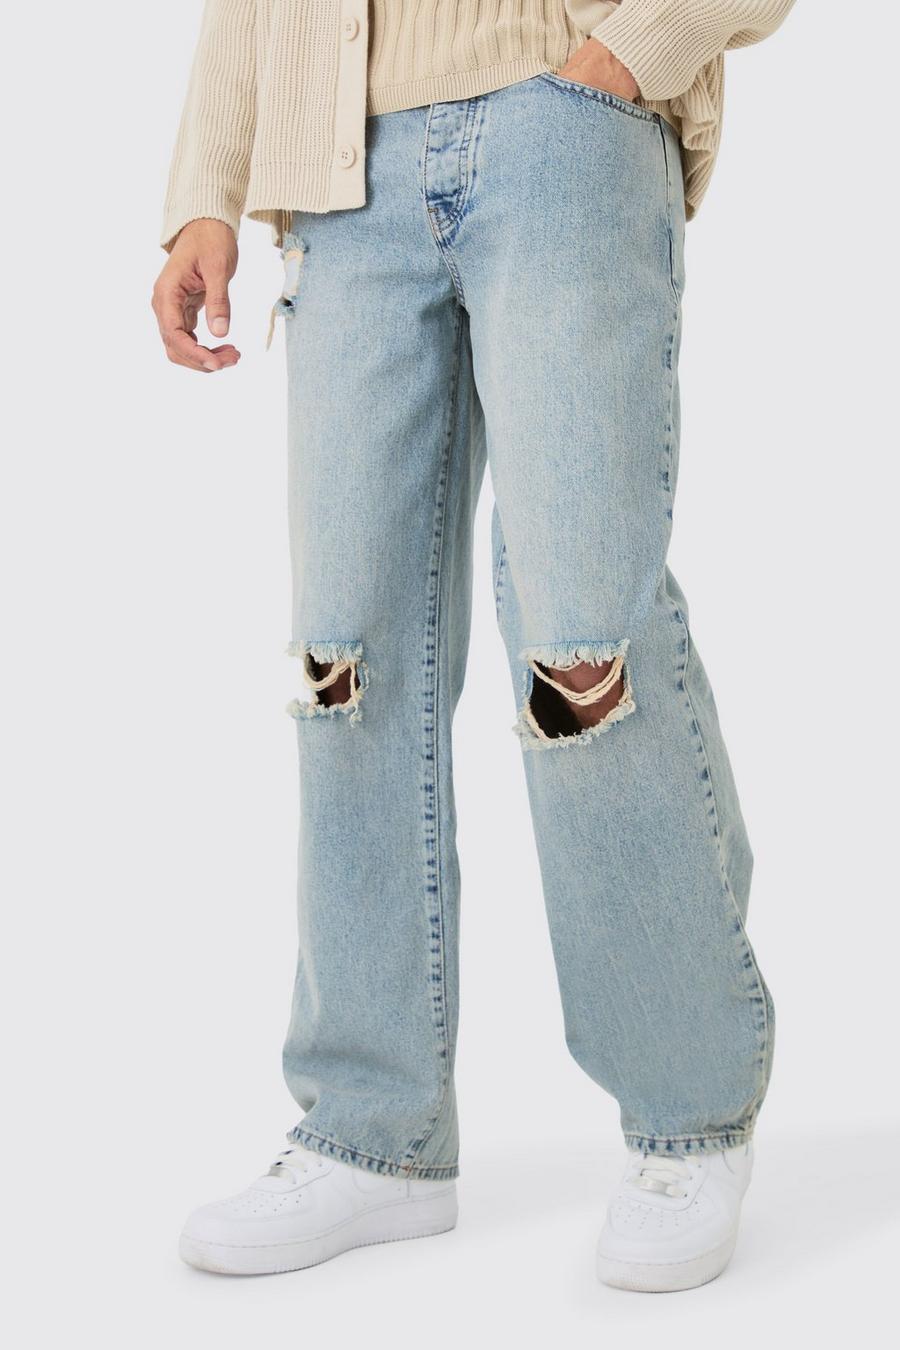 Lockere Jeans mit Riss am Knie in Hellblau, Light blue